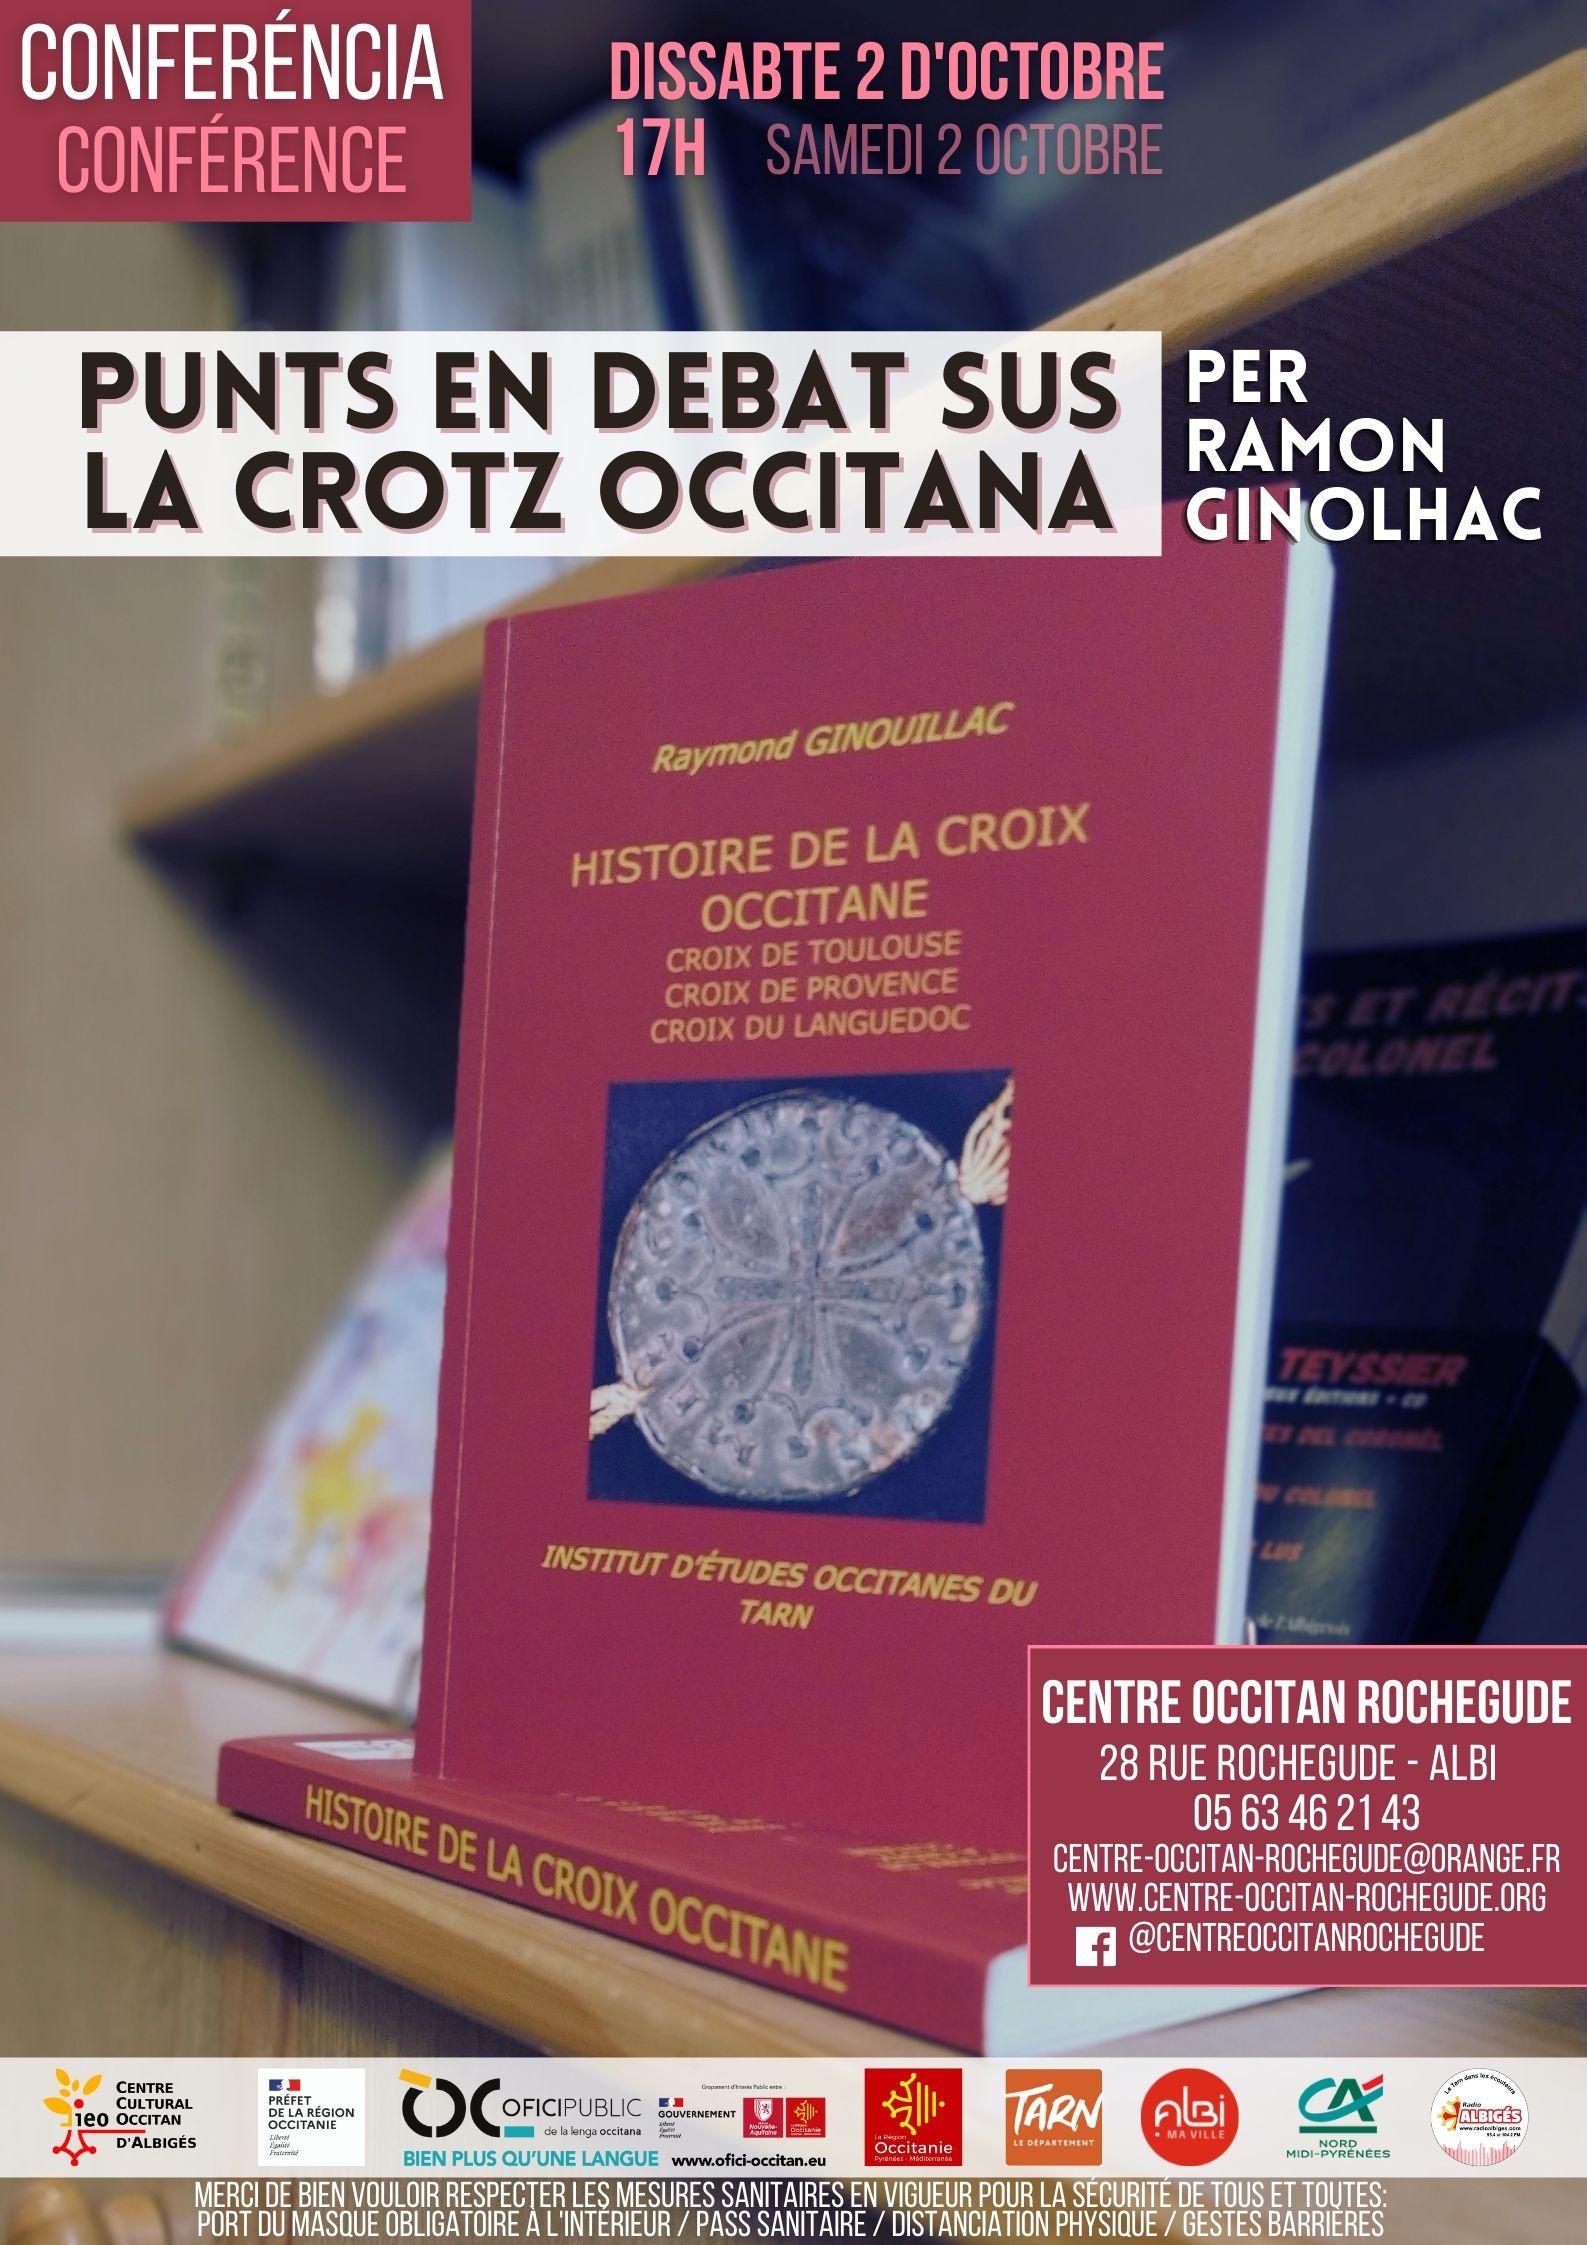 Read more about the article Conferéncia “Punts en debat sus la crotz occitana” per Ramon Ginolhac